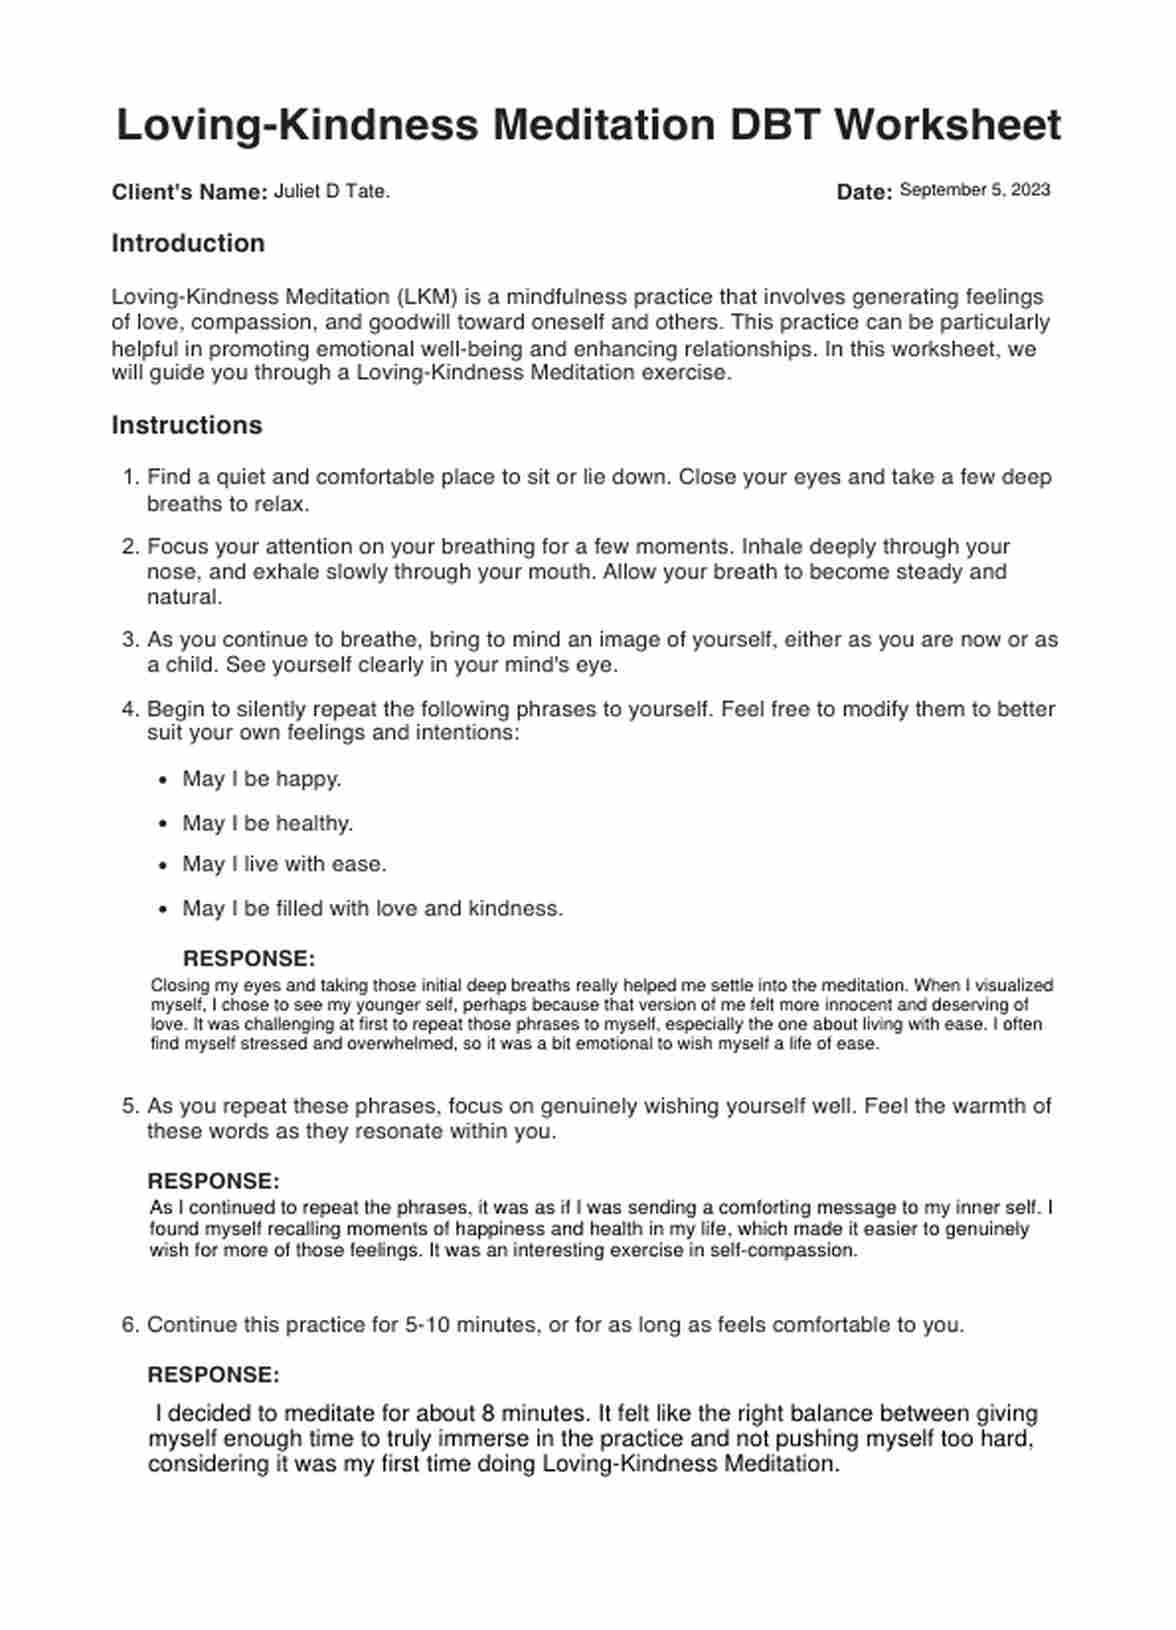 Loving Kindness Meditation DBT Worksheet PDF Example